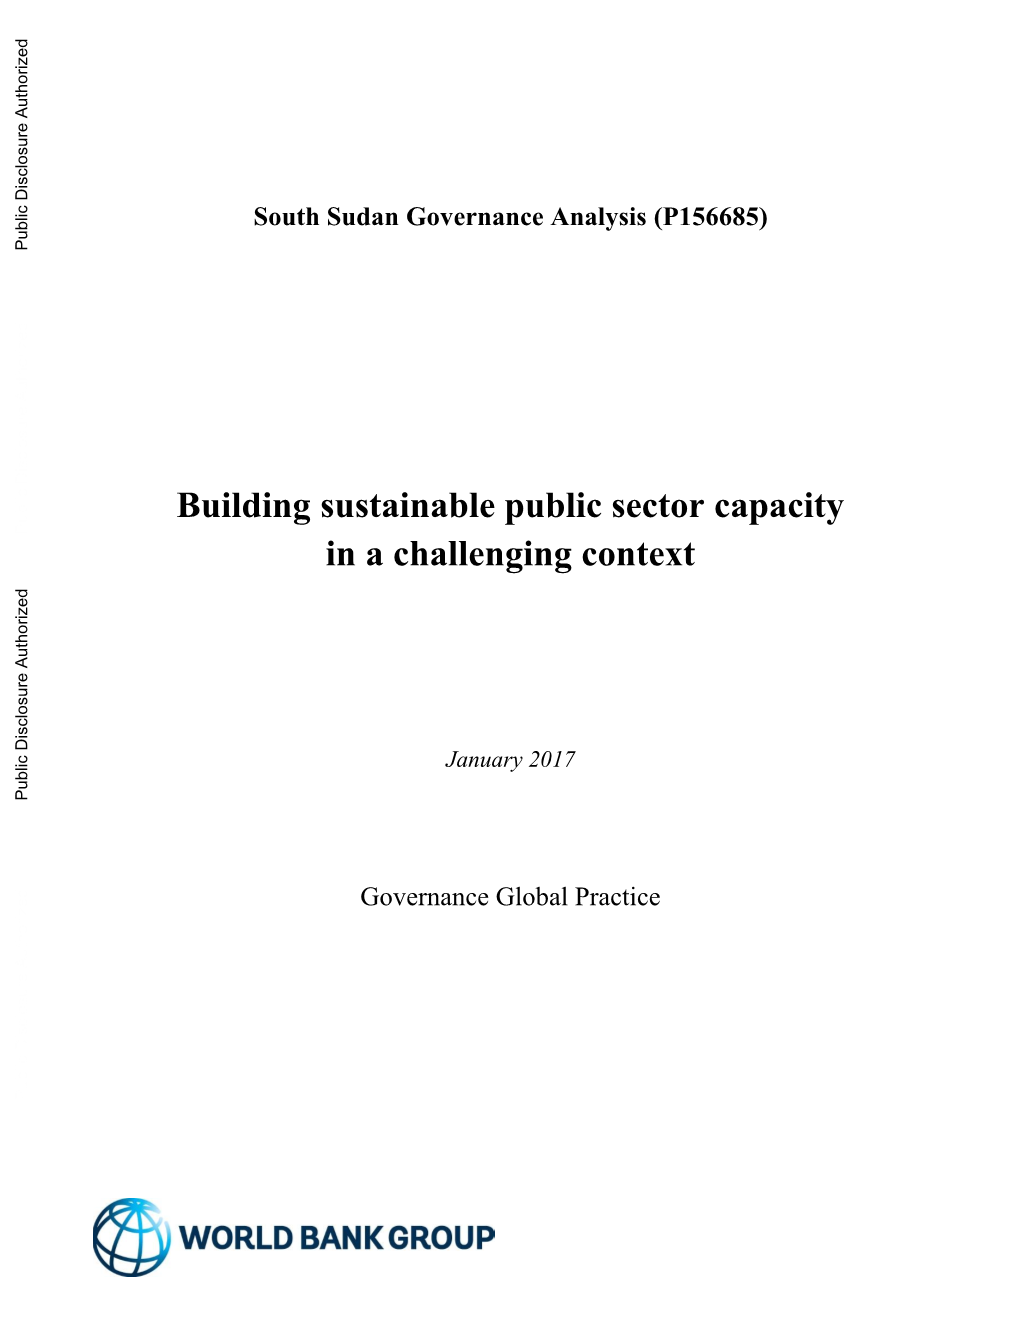 South Sudan Governance Analysis (P156685) Public Disclosure Authorized